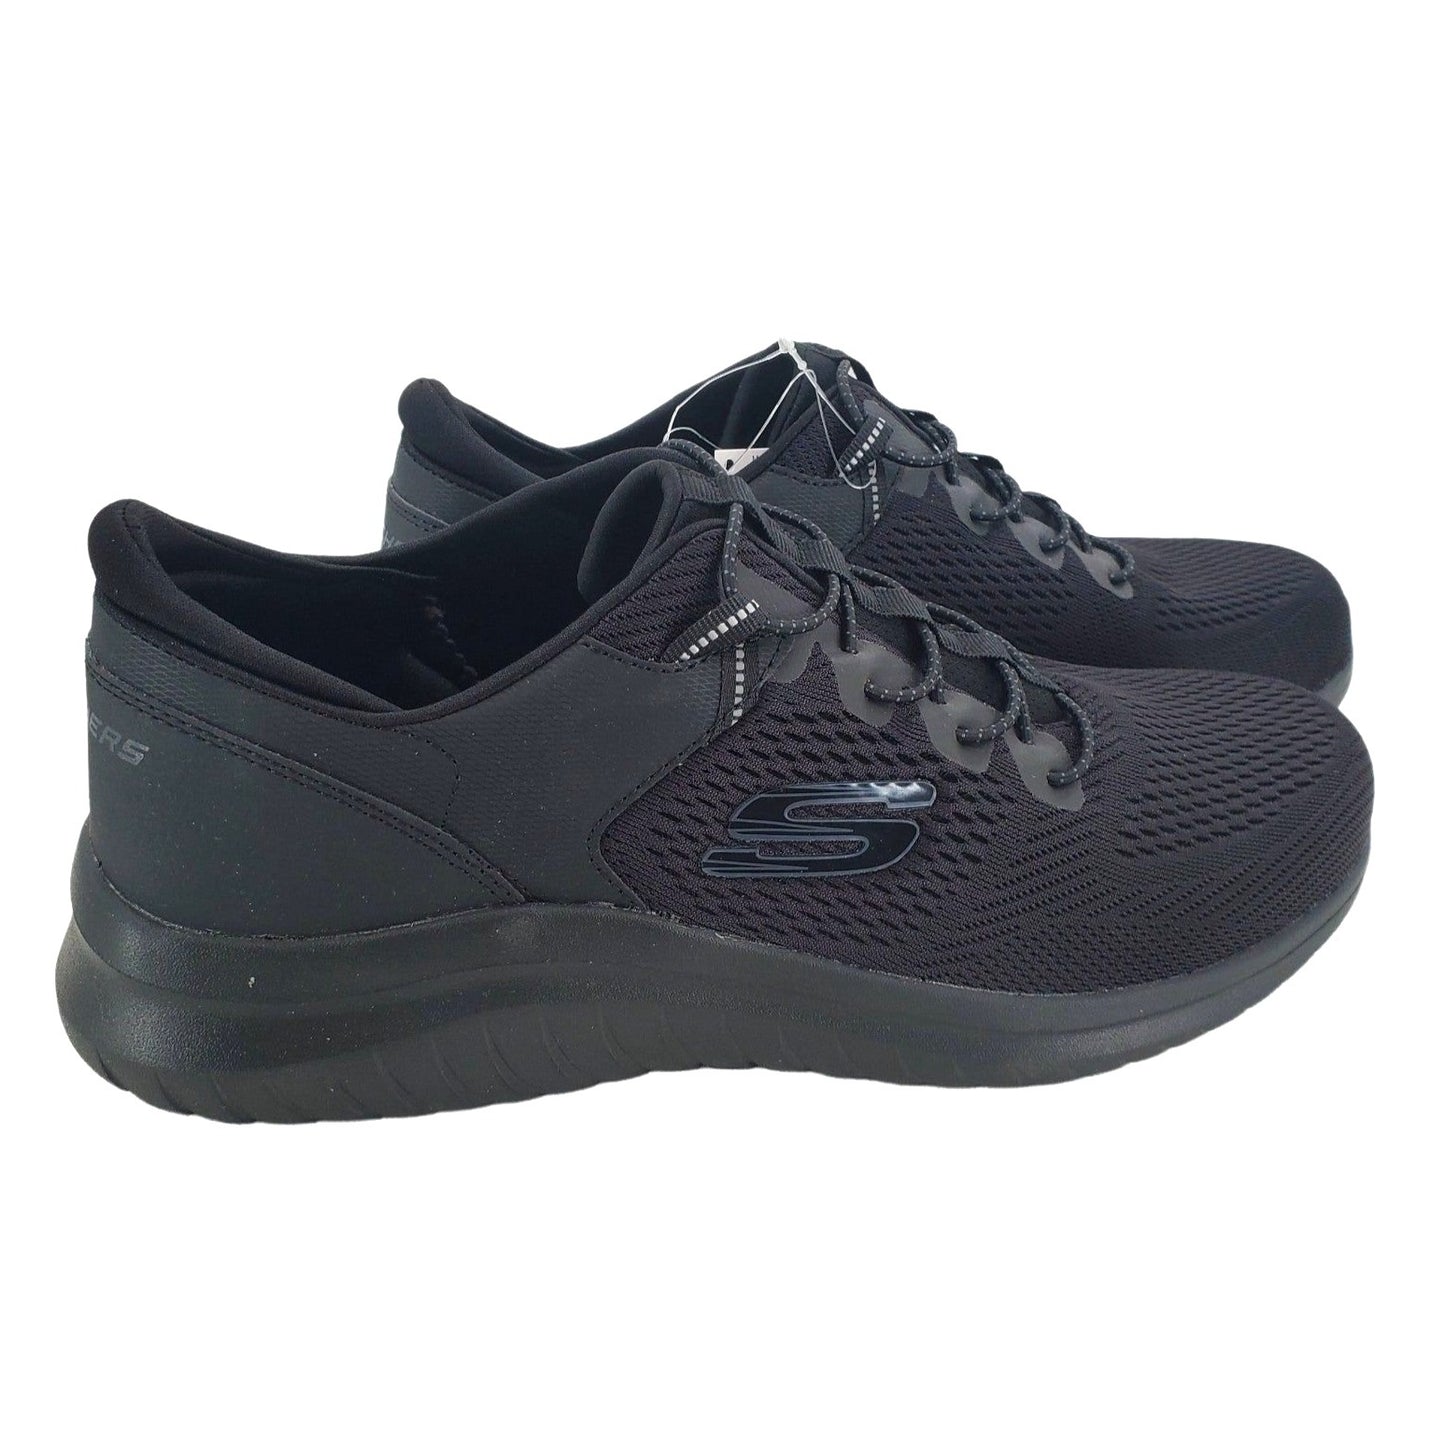 SKECHERS Sneakers Men's Bounders Memory Foam Mesh Knit Athletic shoes